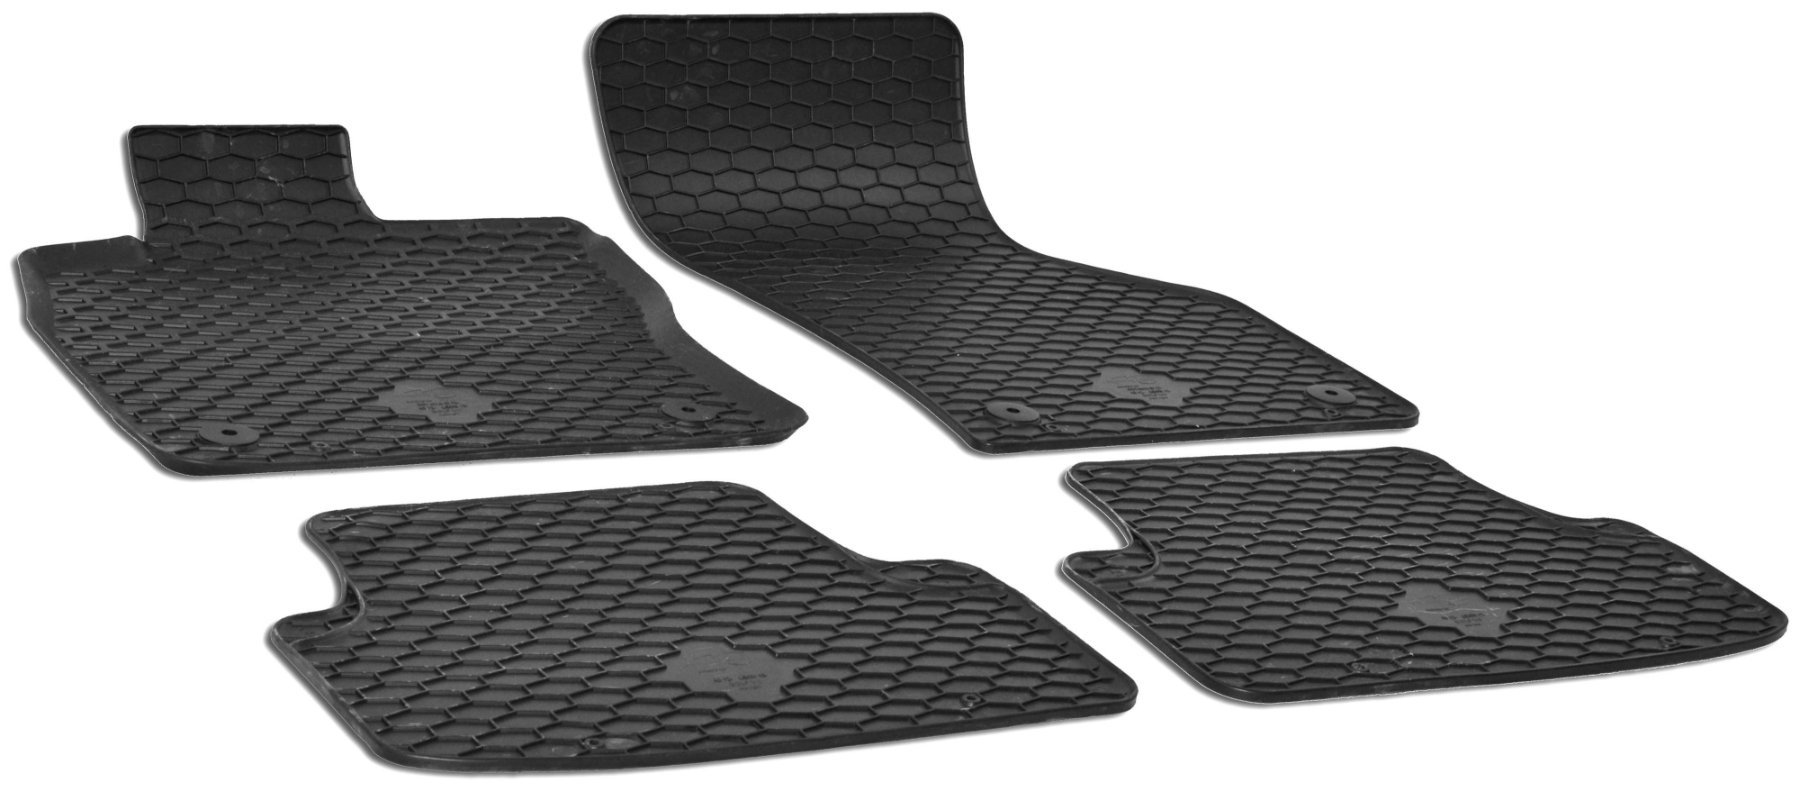 RubberLine rubberen voetmatten geschikt voor Audi A3, VW Golf VII/Golf VII Variant, VW Golf VIII/Golf VIII Variant, Seat Leon